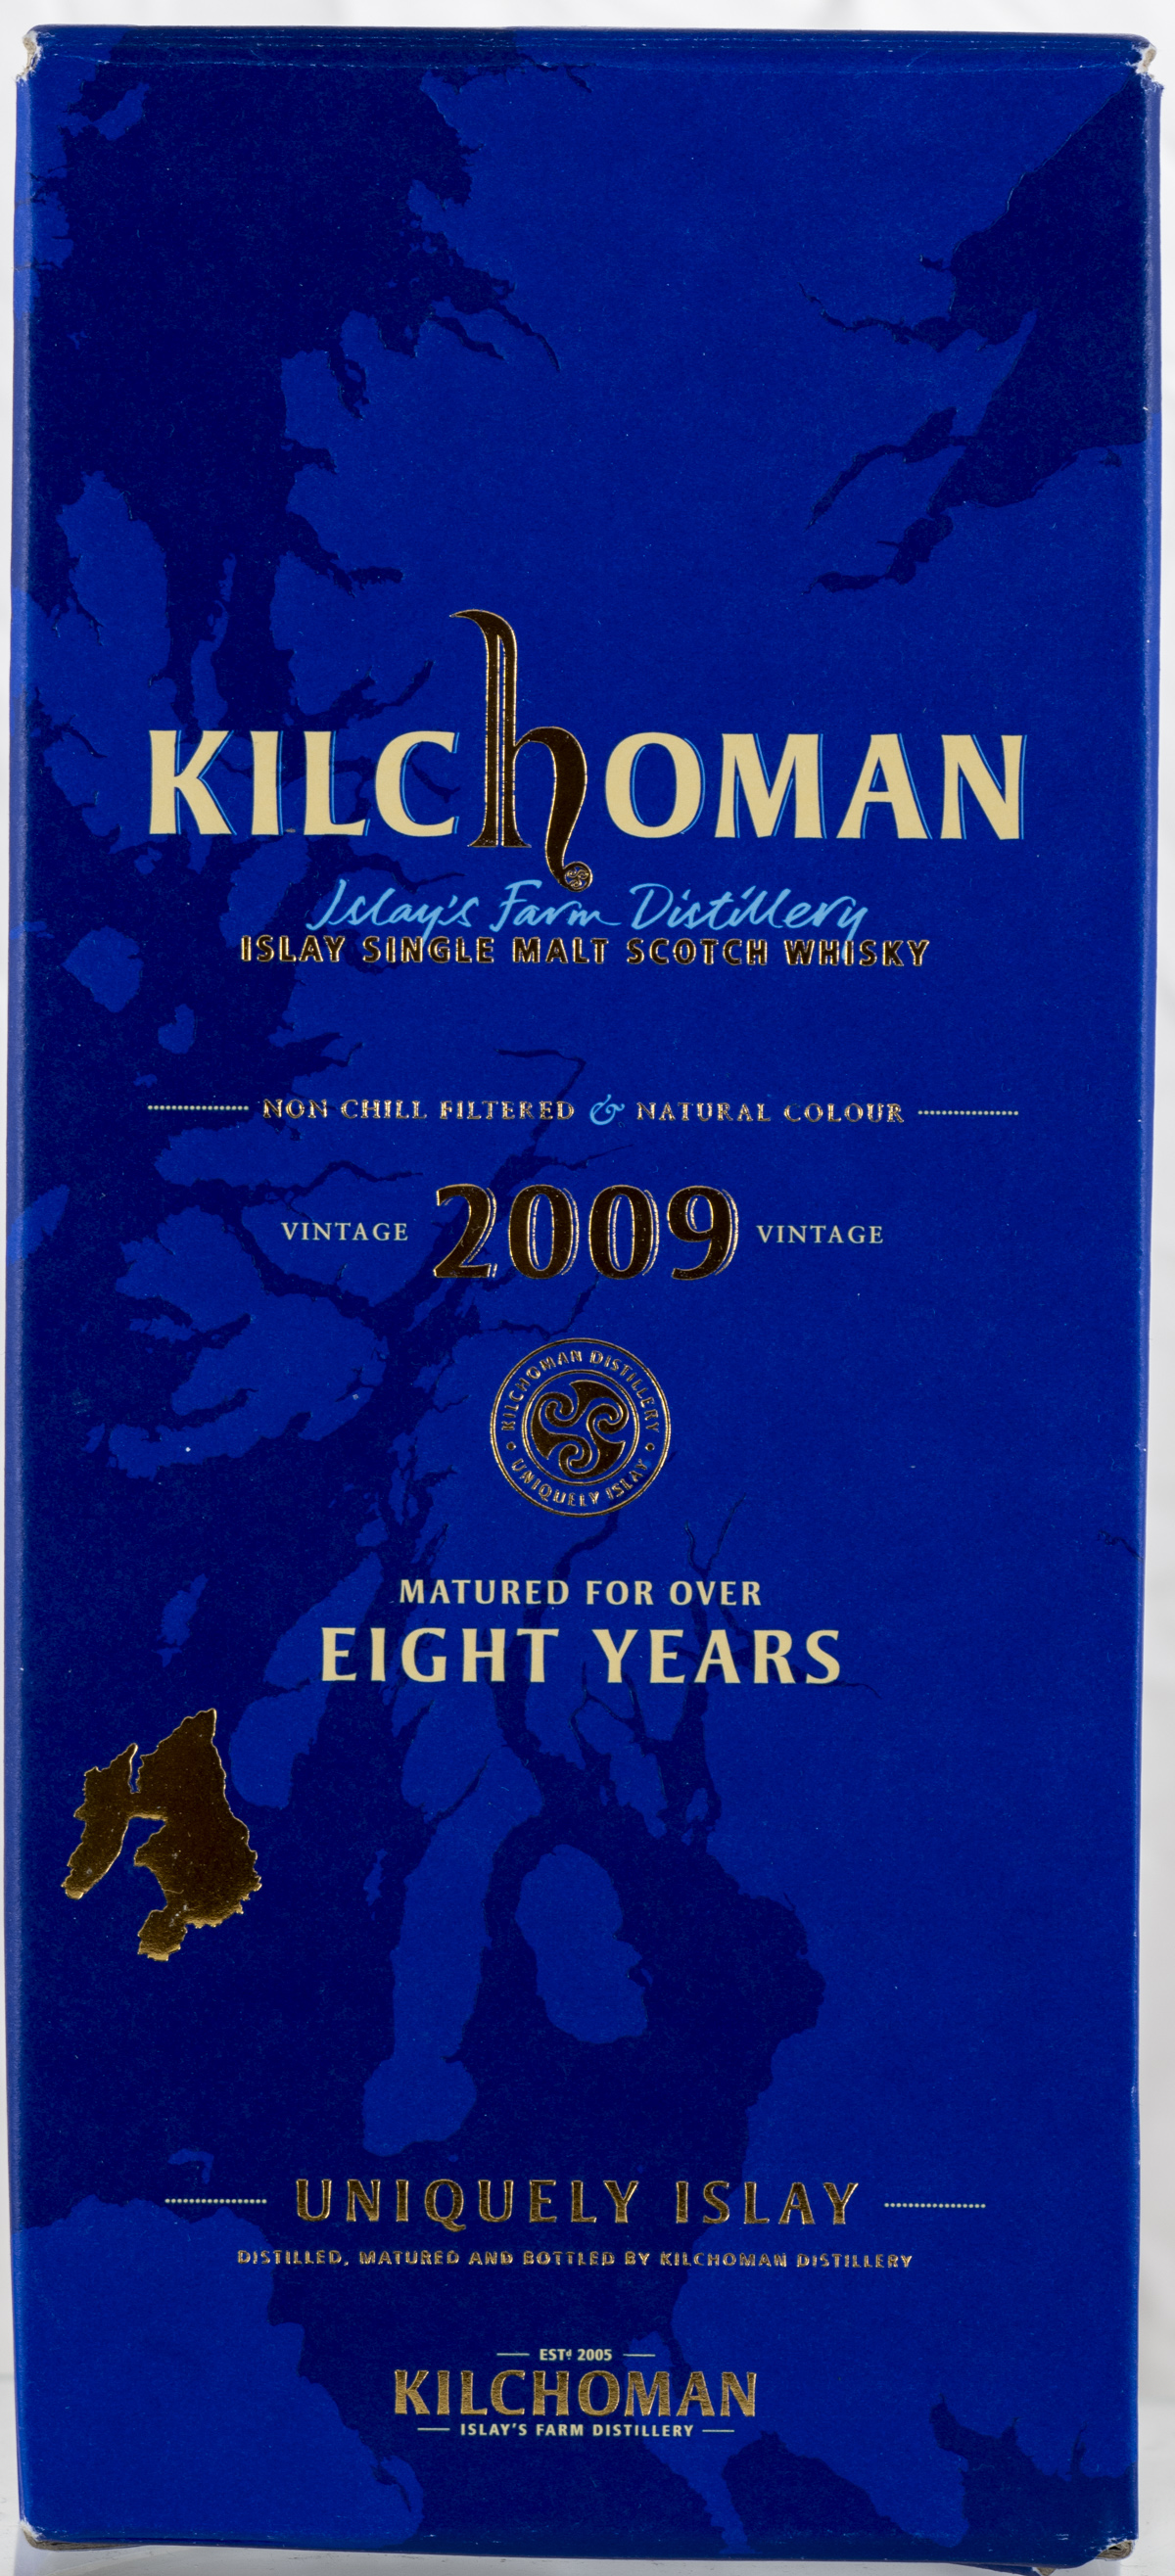 Billede: PHC_4057 - Kilchoma Vintage 2009 8 yers - box front.jpg